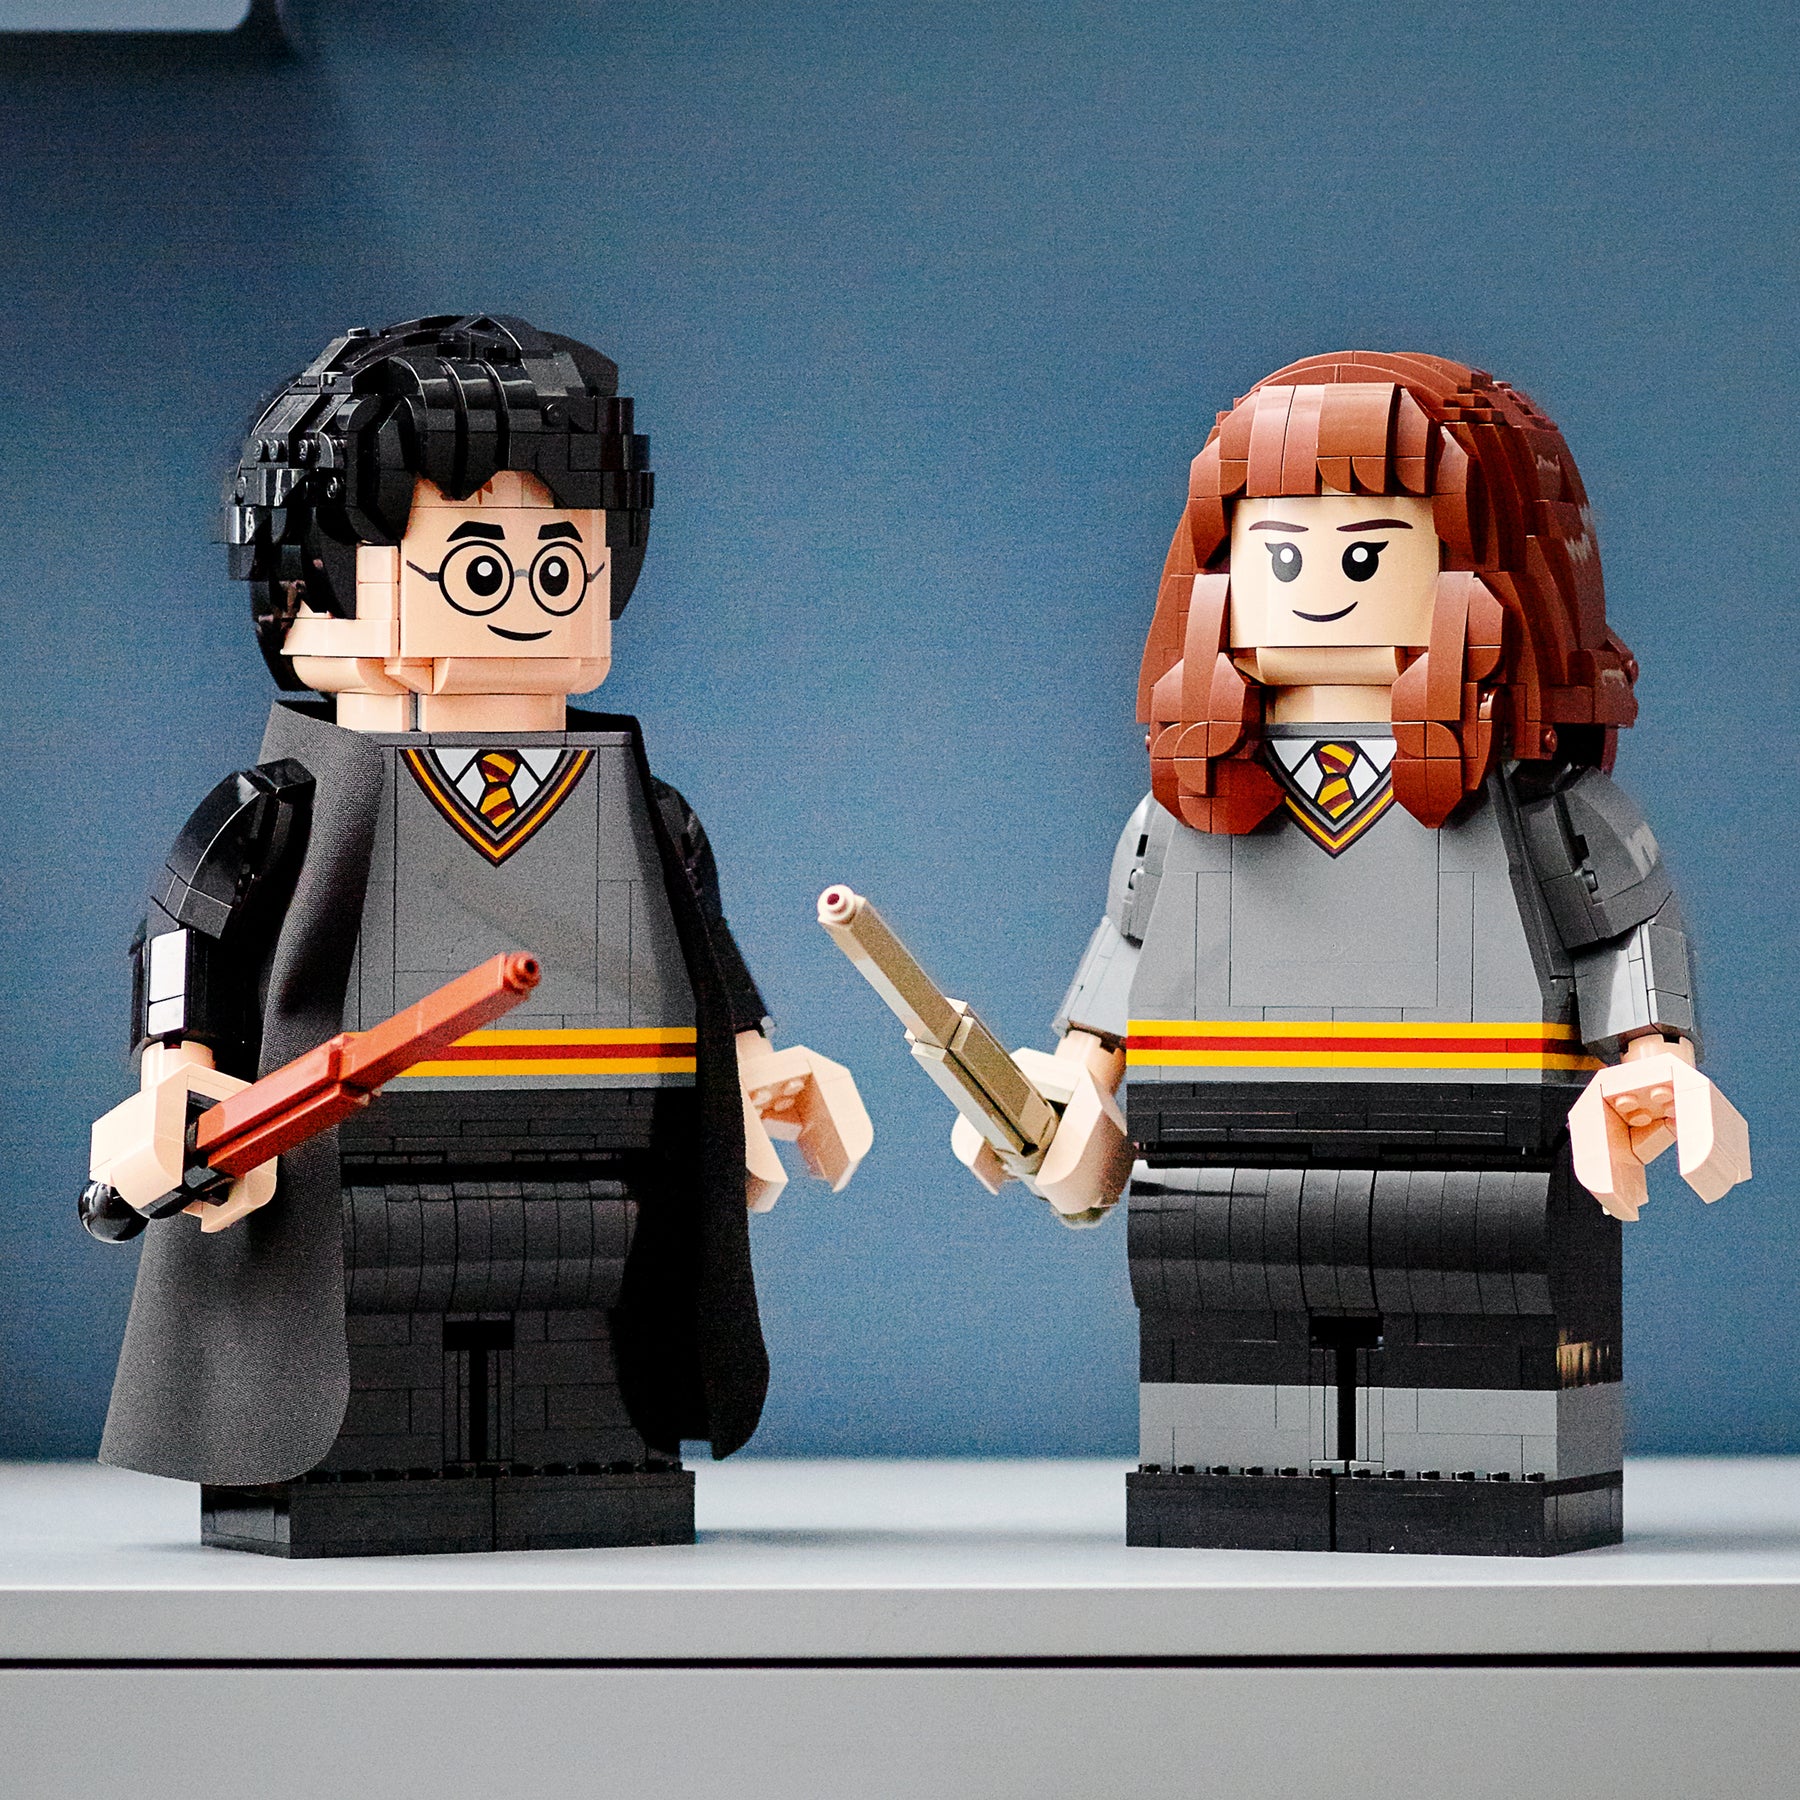 Harry Potter y Hermione Granger™